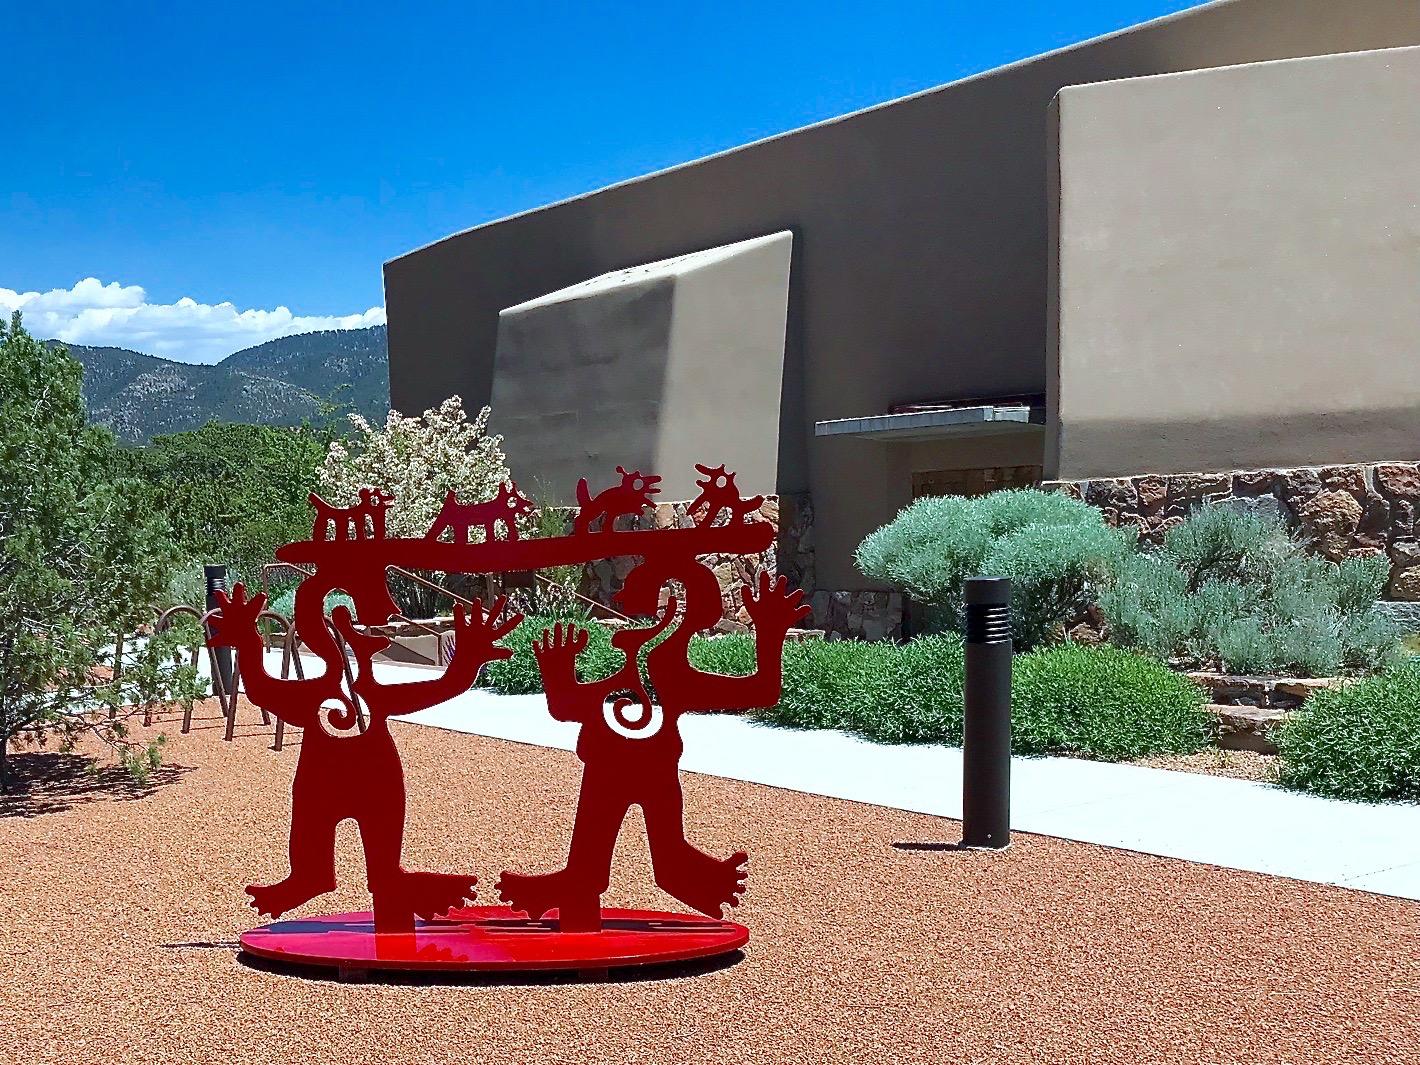 Two Minds Meeting, Melanie Yazzie large red sculpture, animals, people, Navajo 1